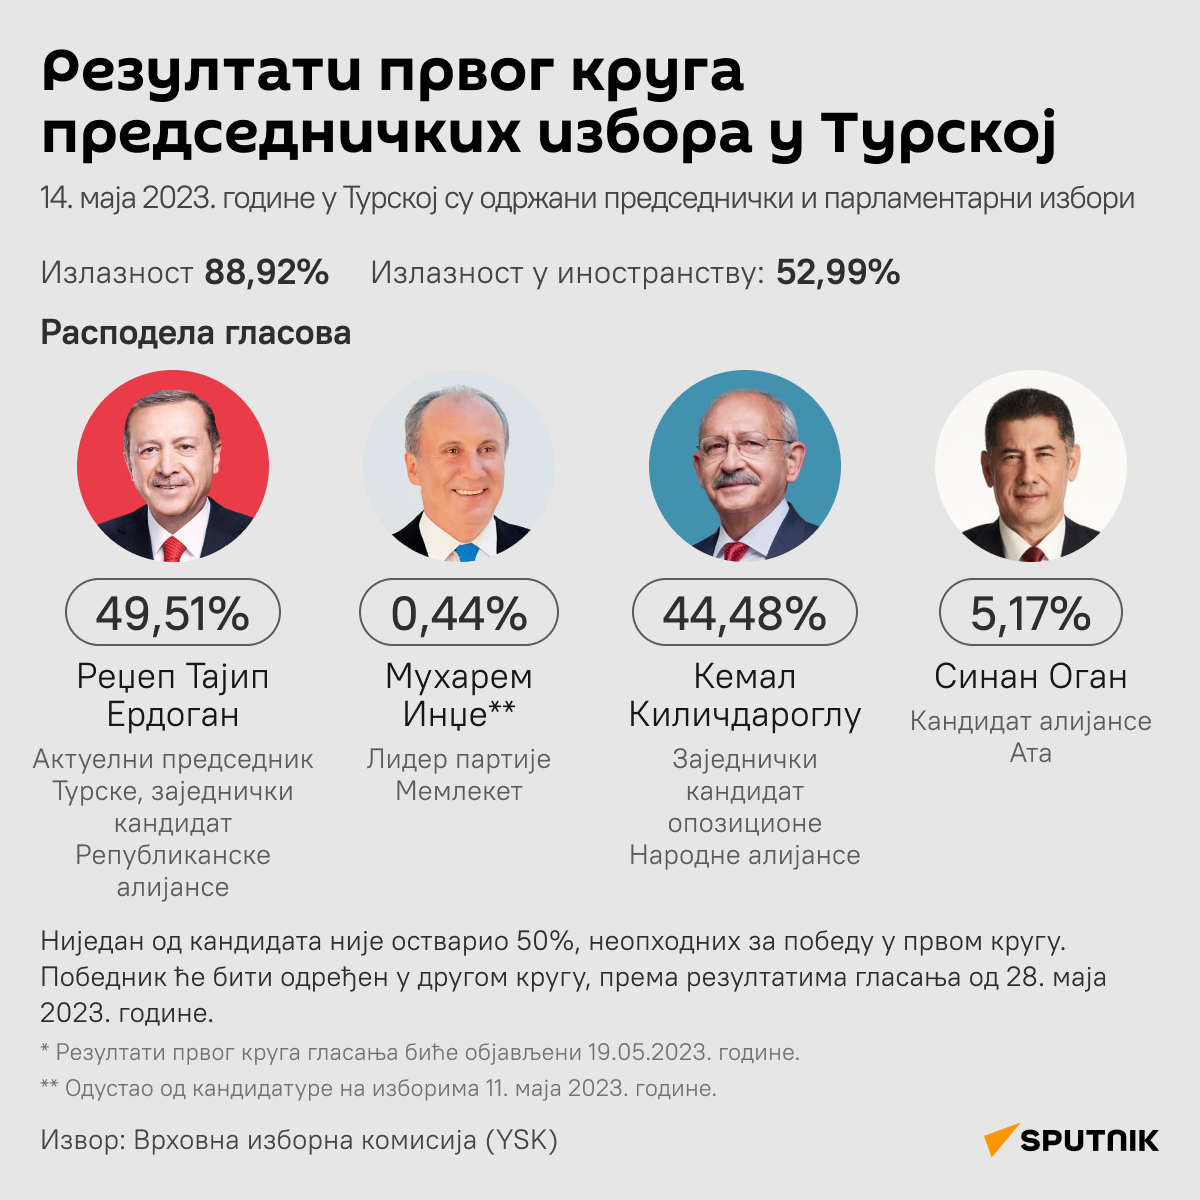 Инфографика Турска председнички избори резултати Ћирилица деск - Sputnik Србија